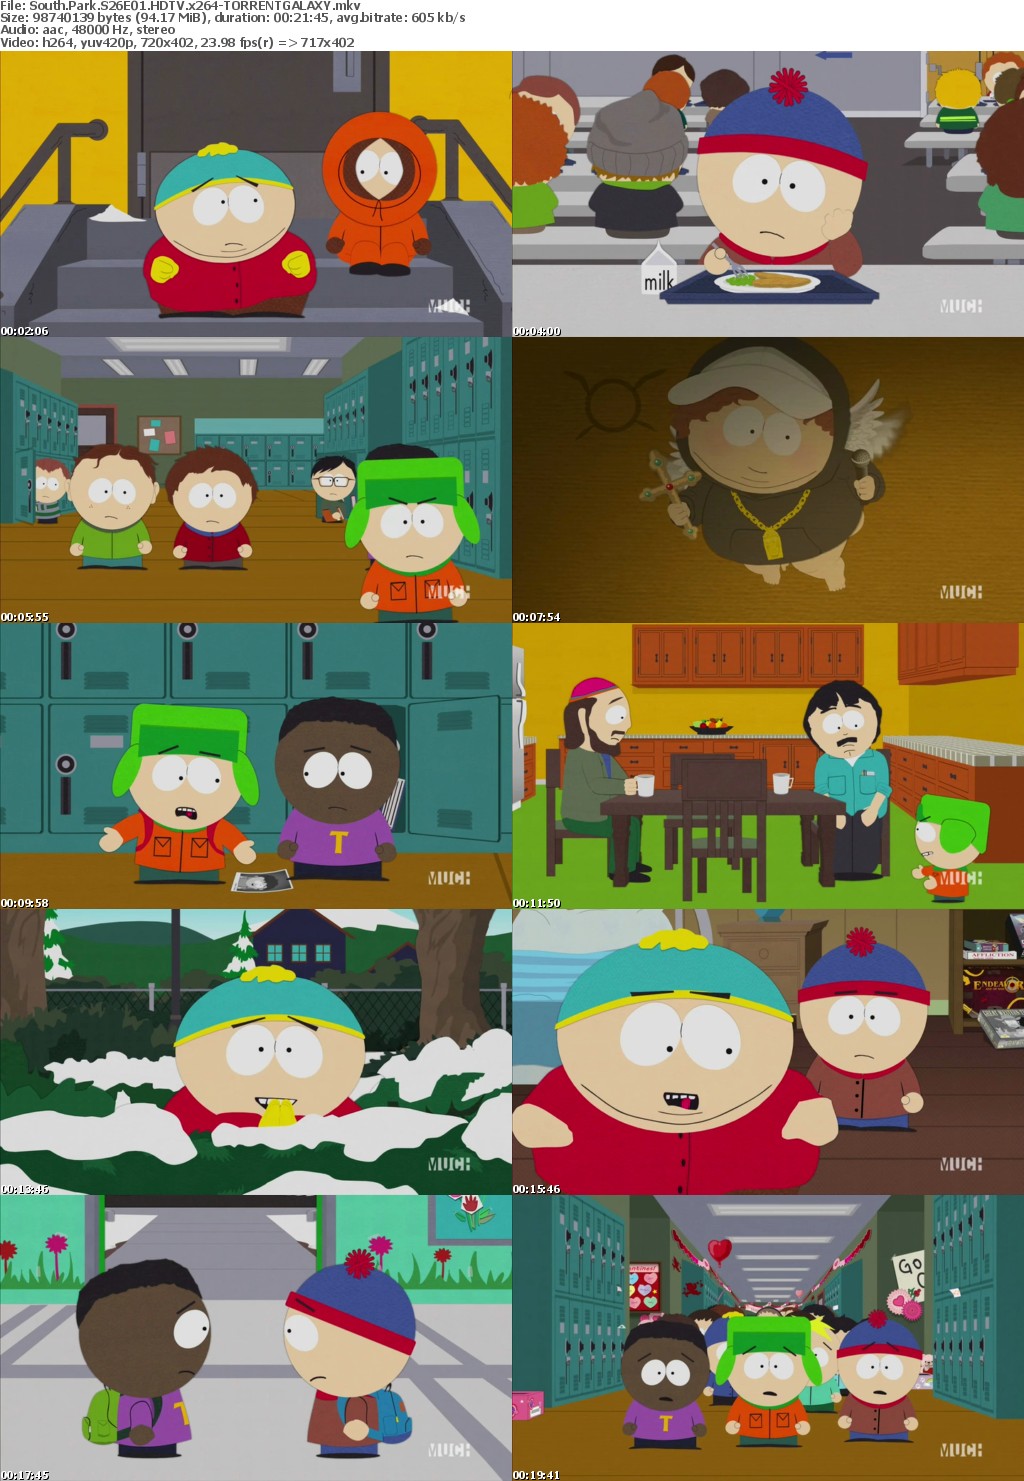 South Park S26E01 HDTV x264-GALAXY